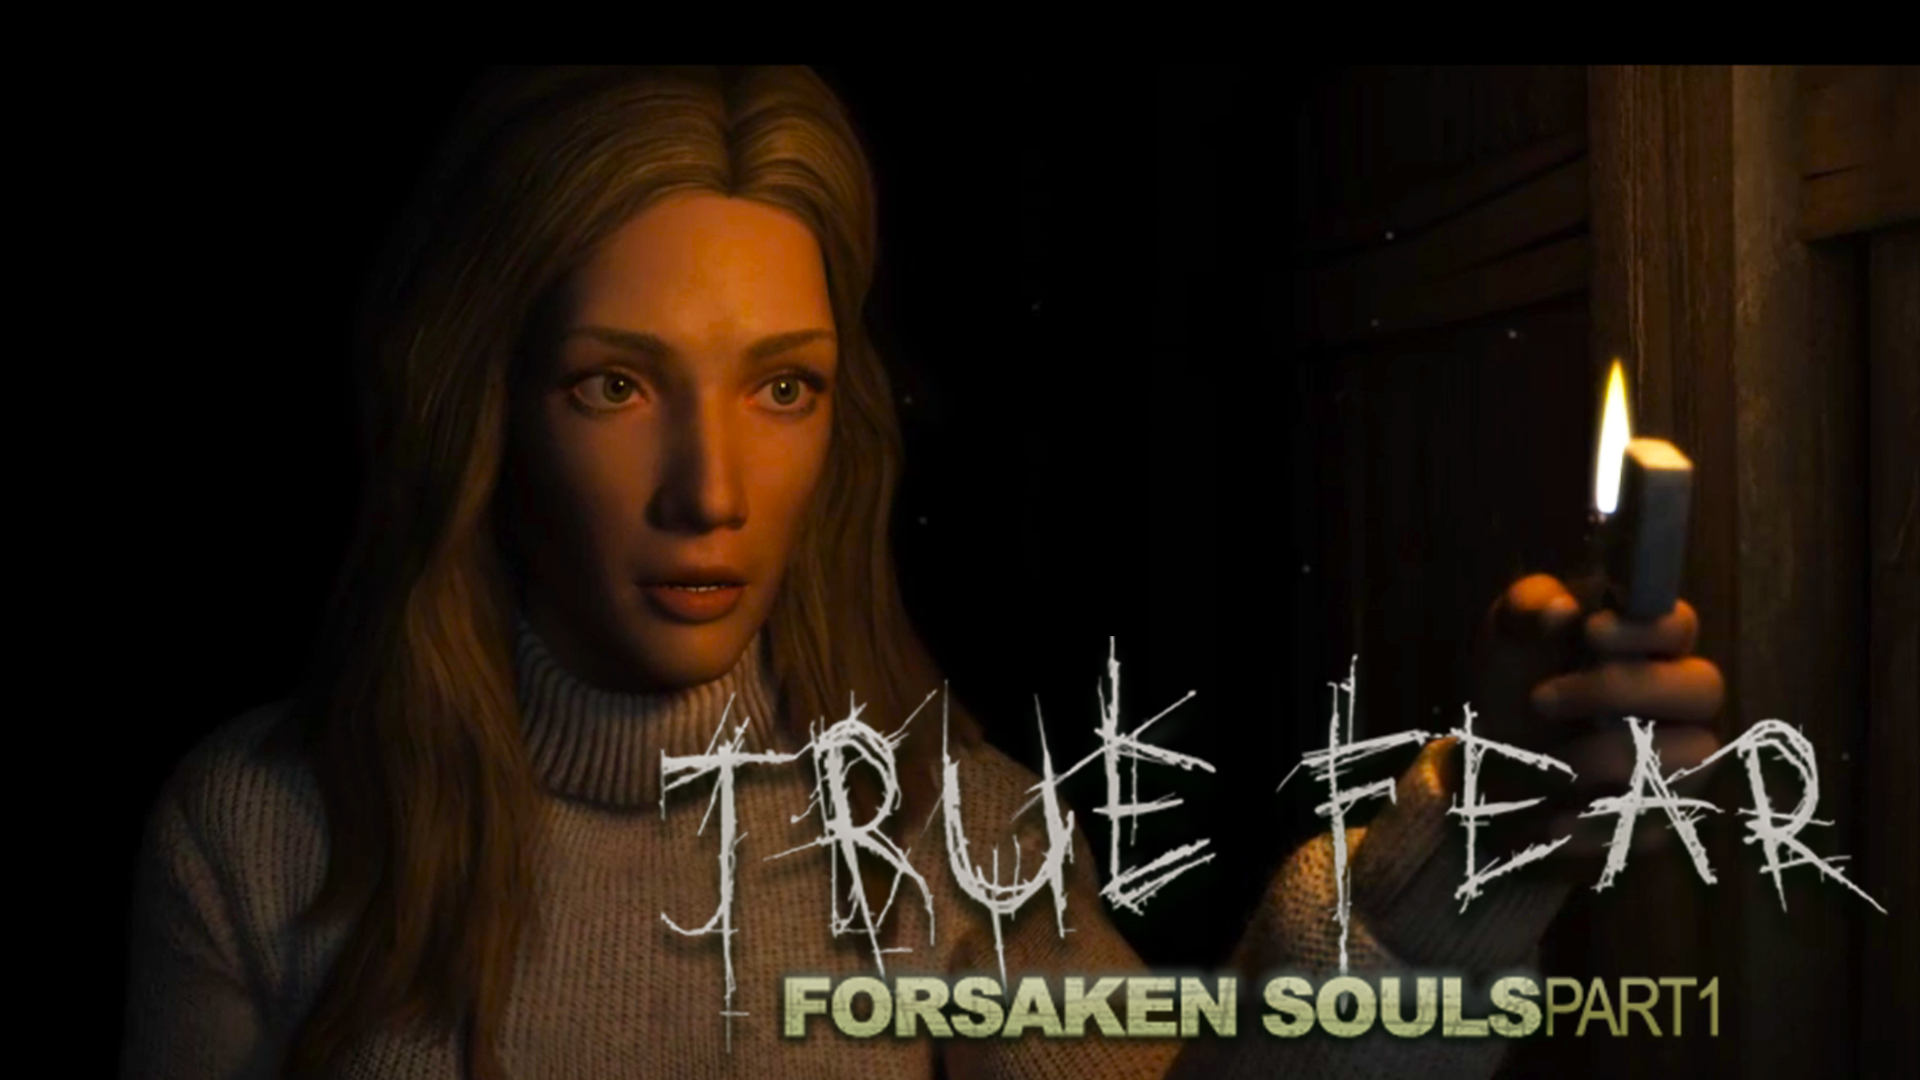 Forsaken souls 3. Игра true Fear Forsaken Souls. True Fear Forsaken Souls 2. Персонажи true Fear Forsaken Souls Part 2. True Fear FS - Part 2.